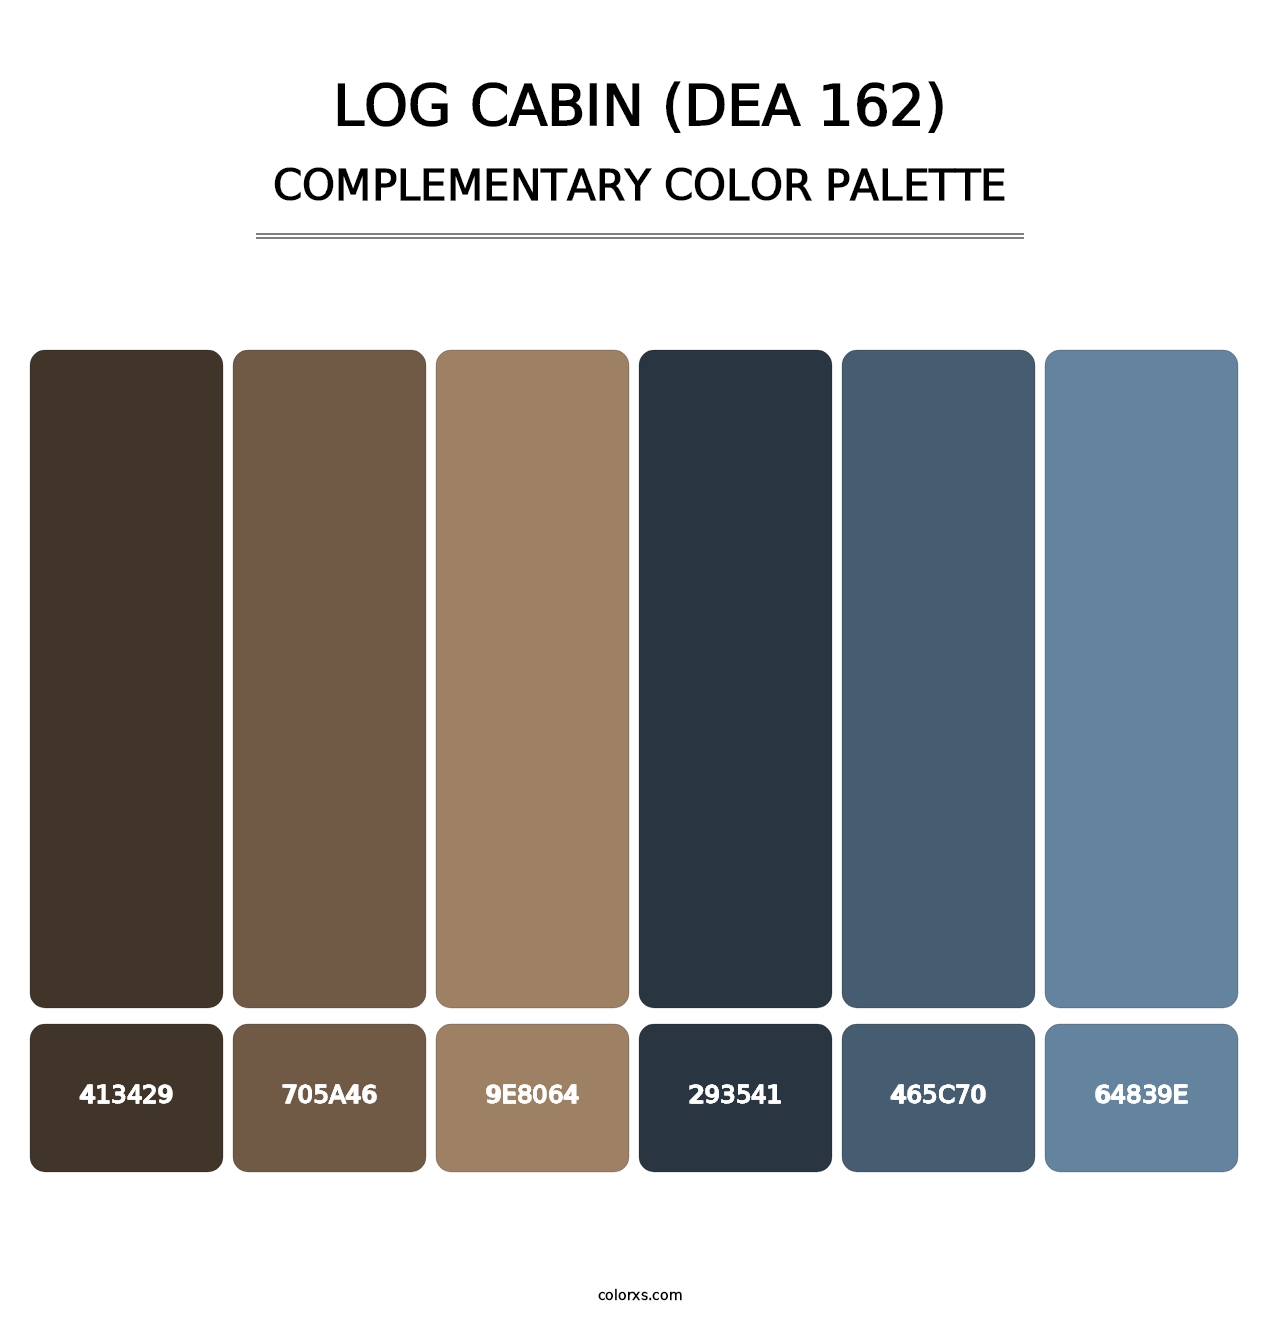 Log Cabin (DEA 162) - Complementary Color Palette